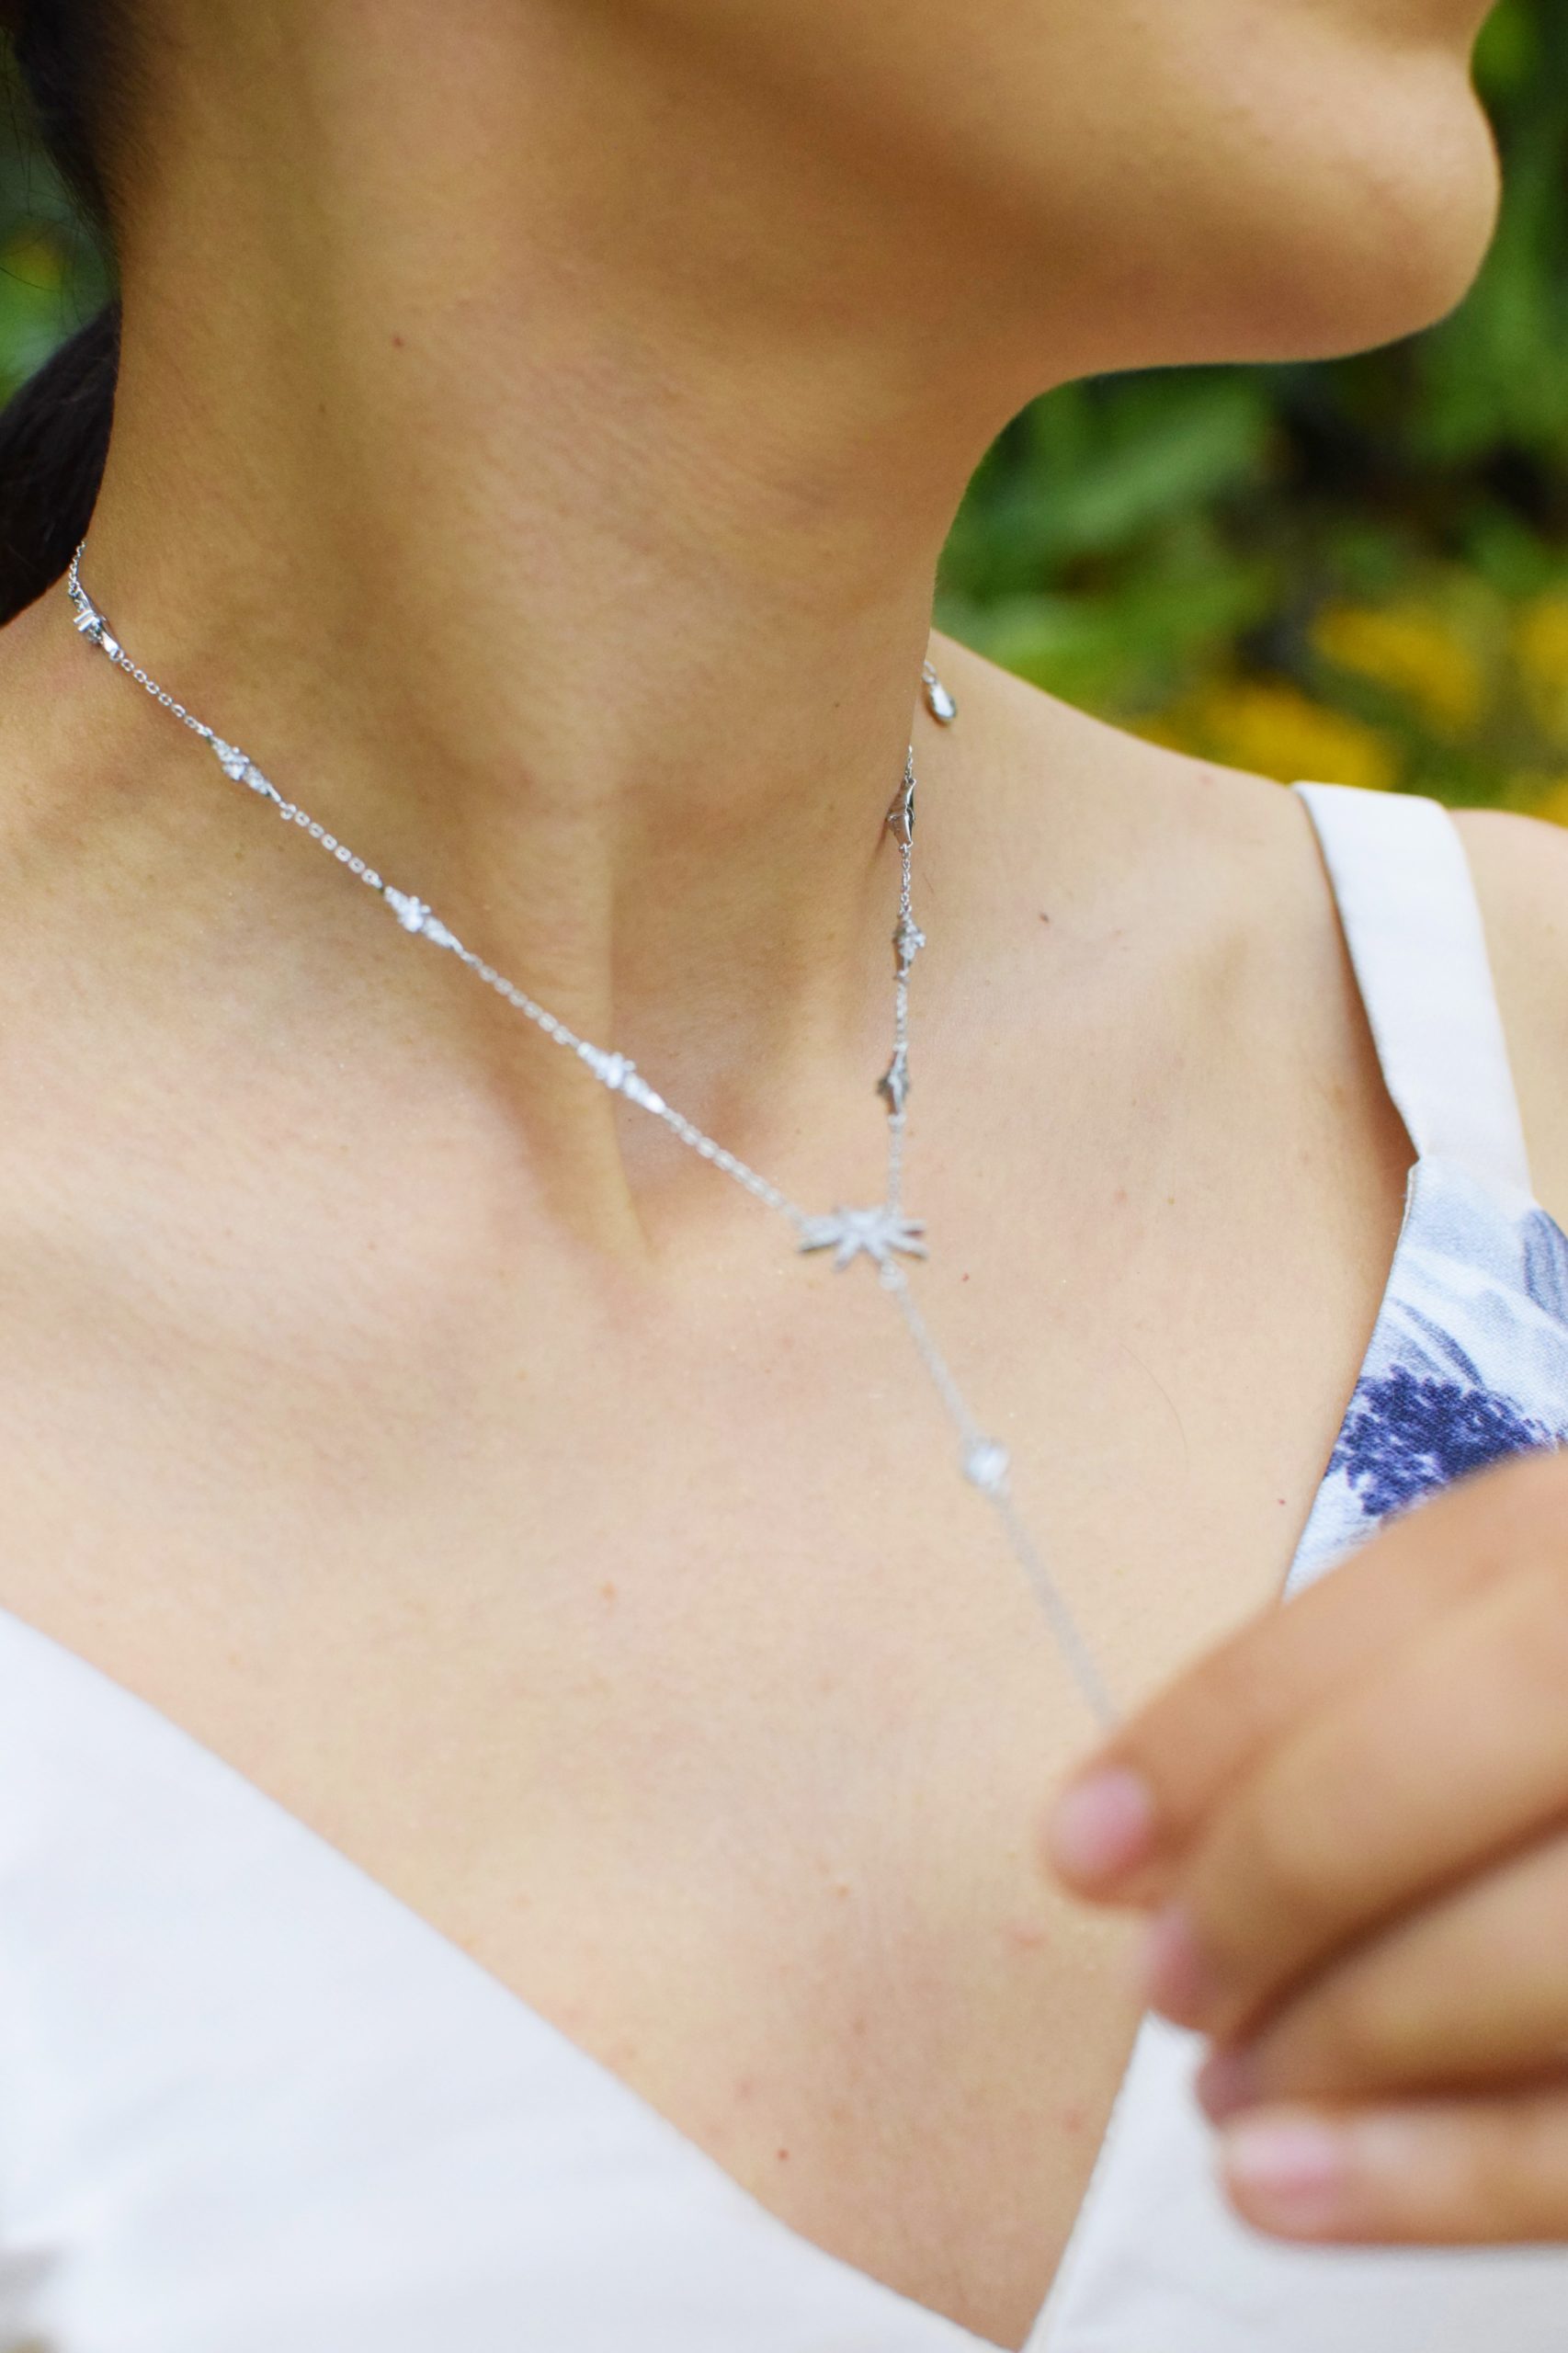 <img src="close.jpg" alt="close up of carat london mimosa necklace"/> 